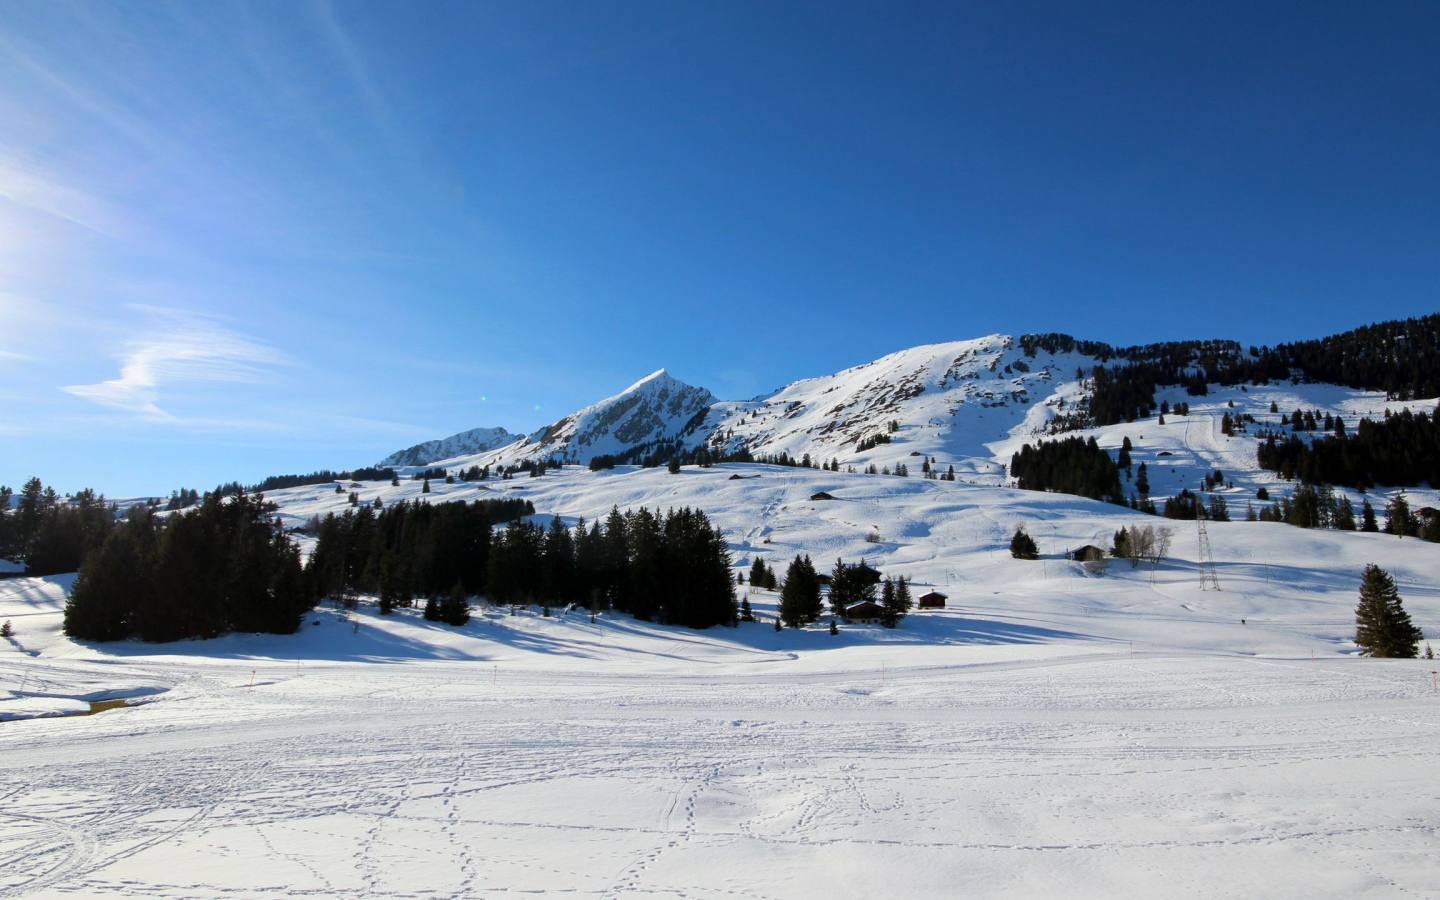 Ski trail in the mountains